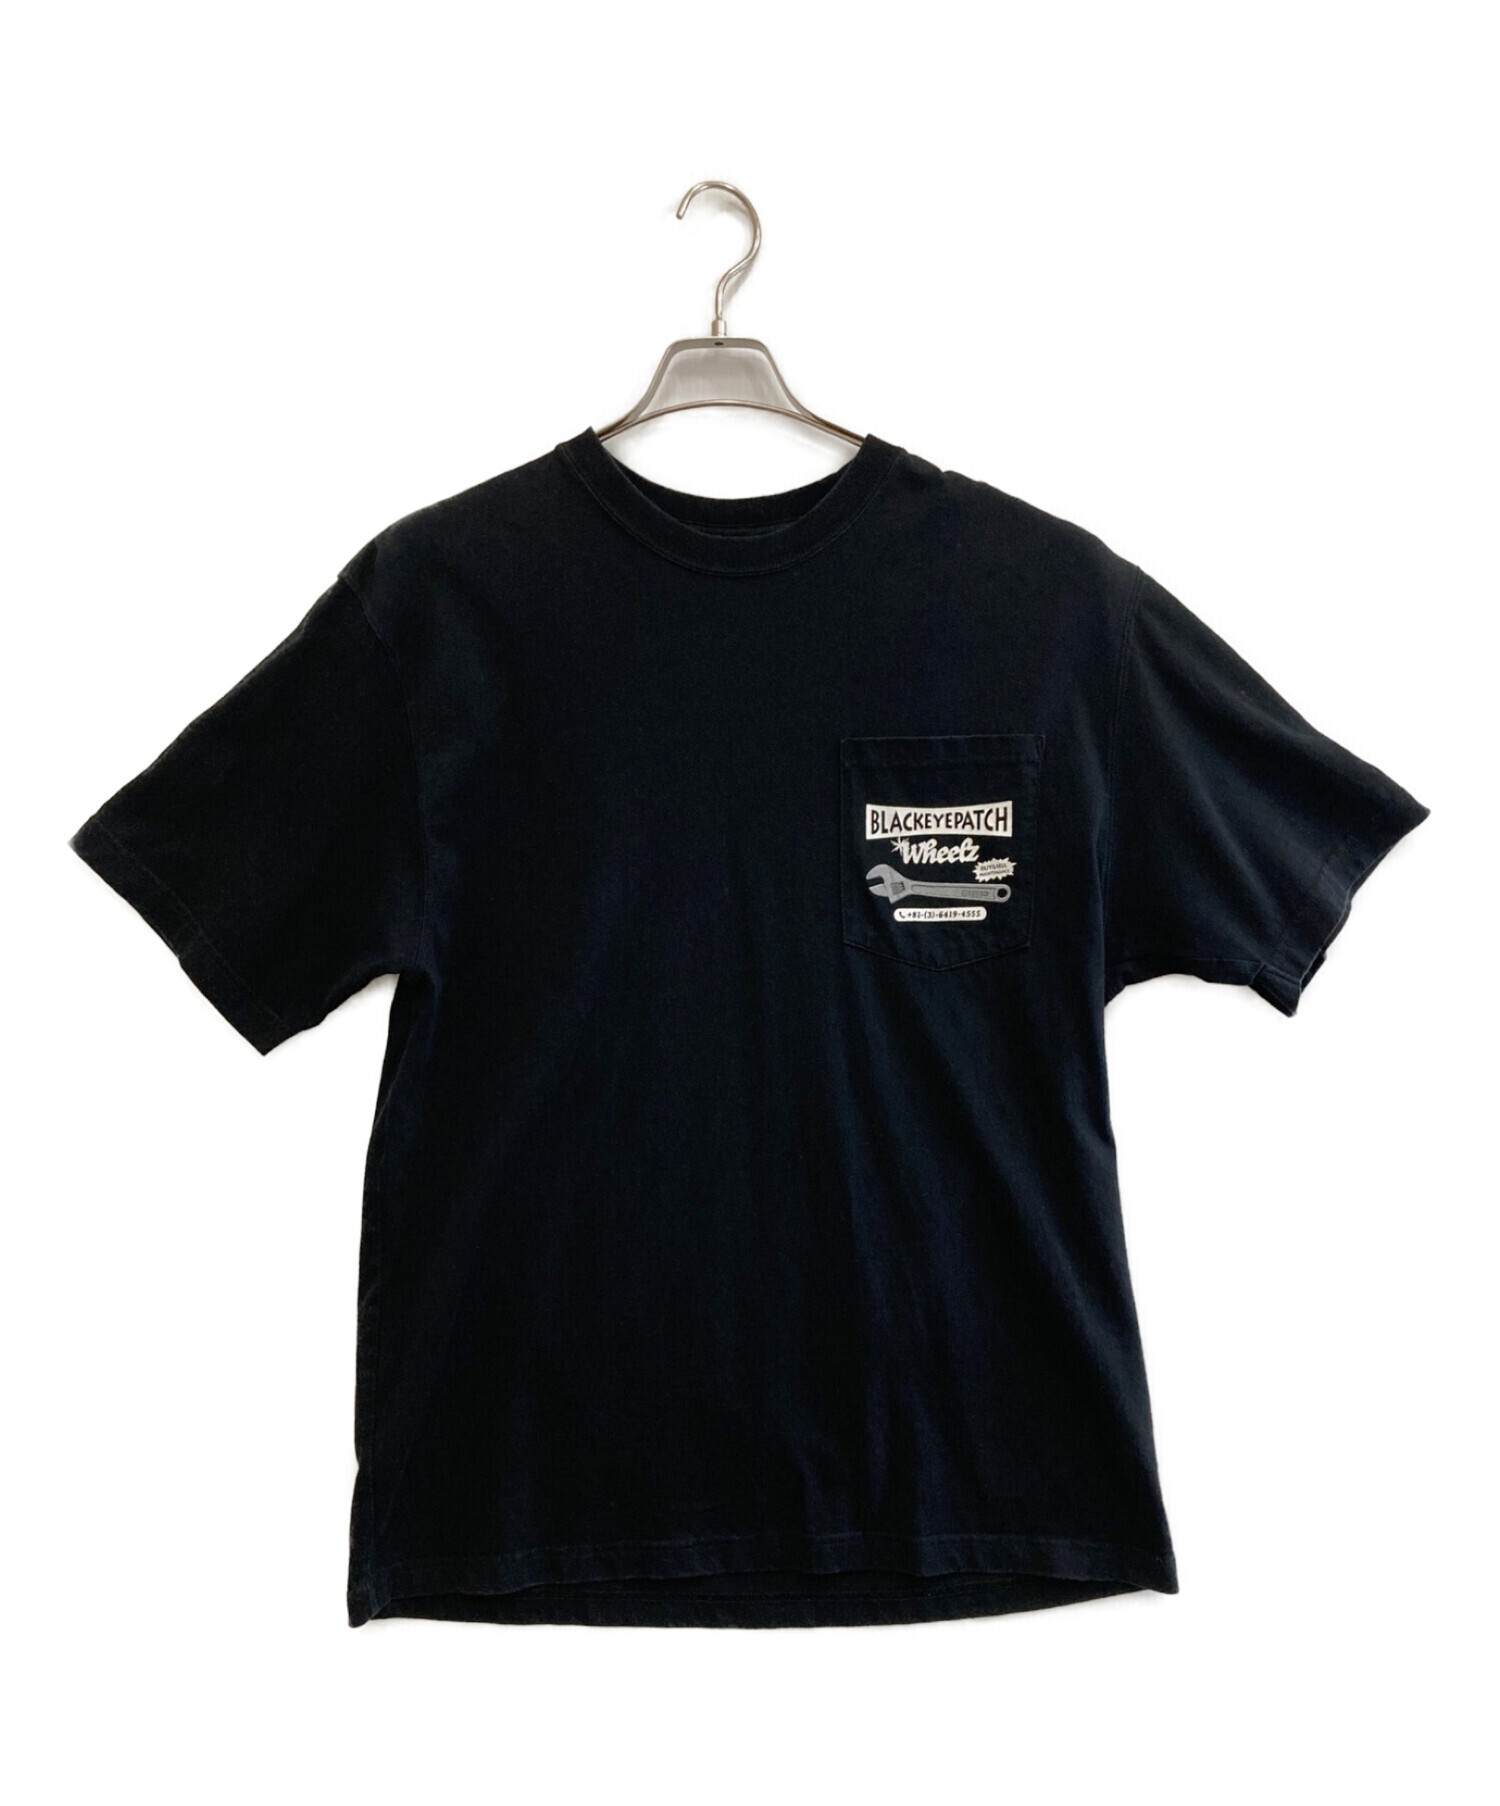 THE BLACK EYE PATCH (ブラックアイパッチ) 半袖Tシャツ ブラック サイズ:L